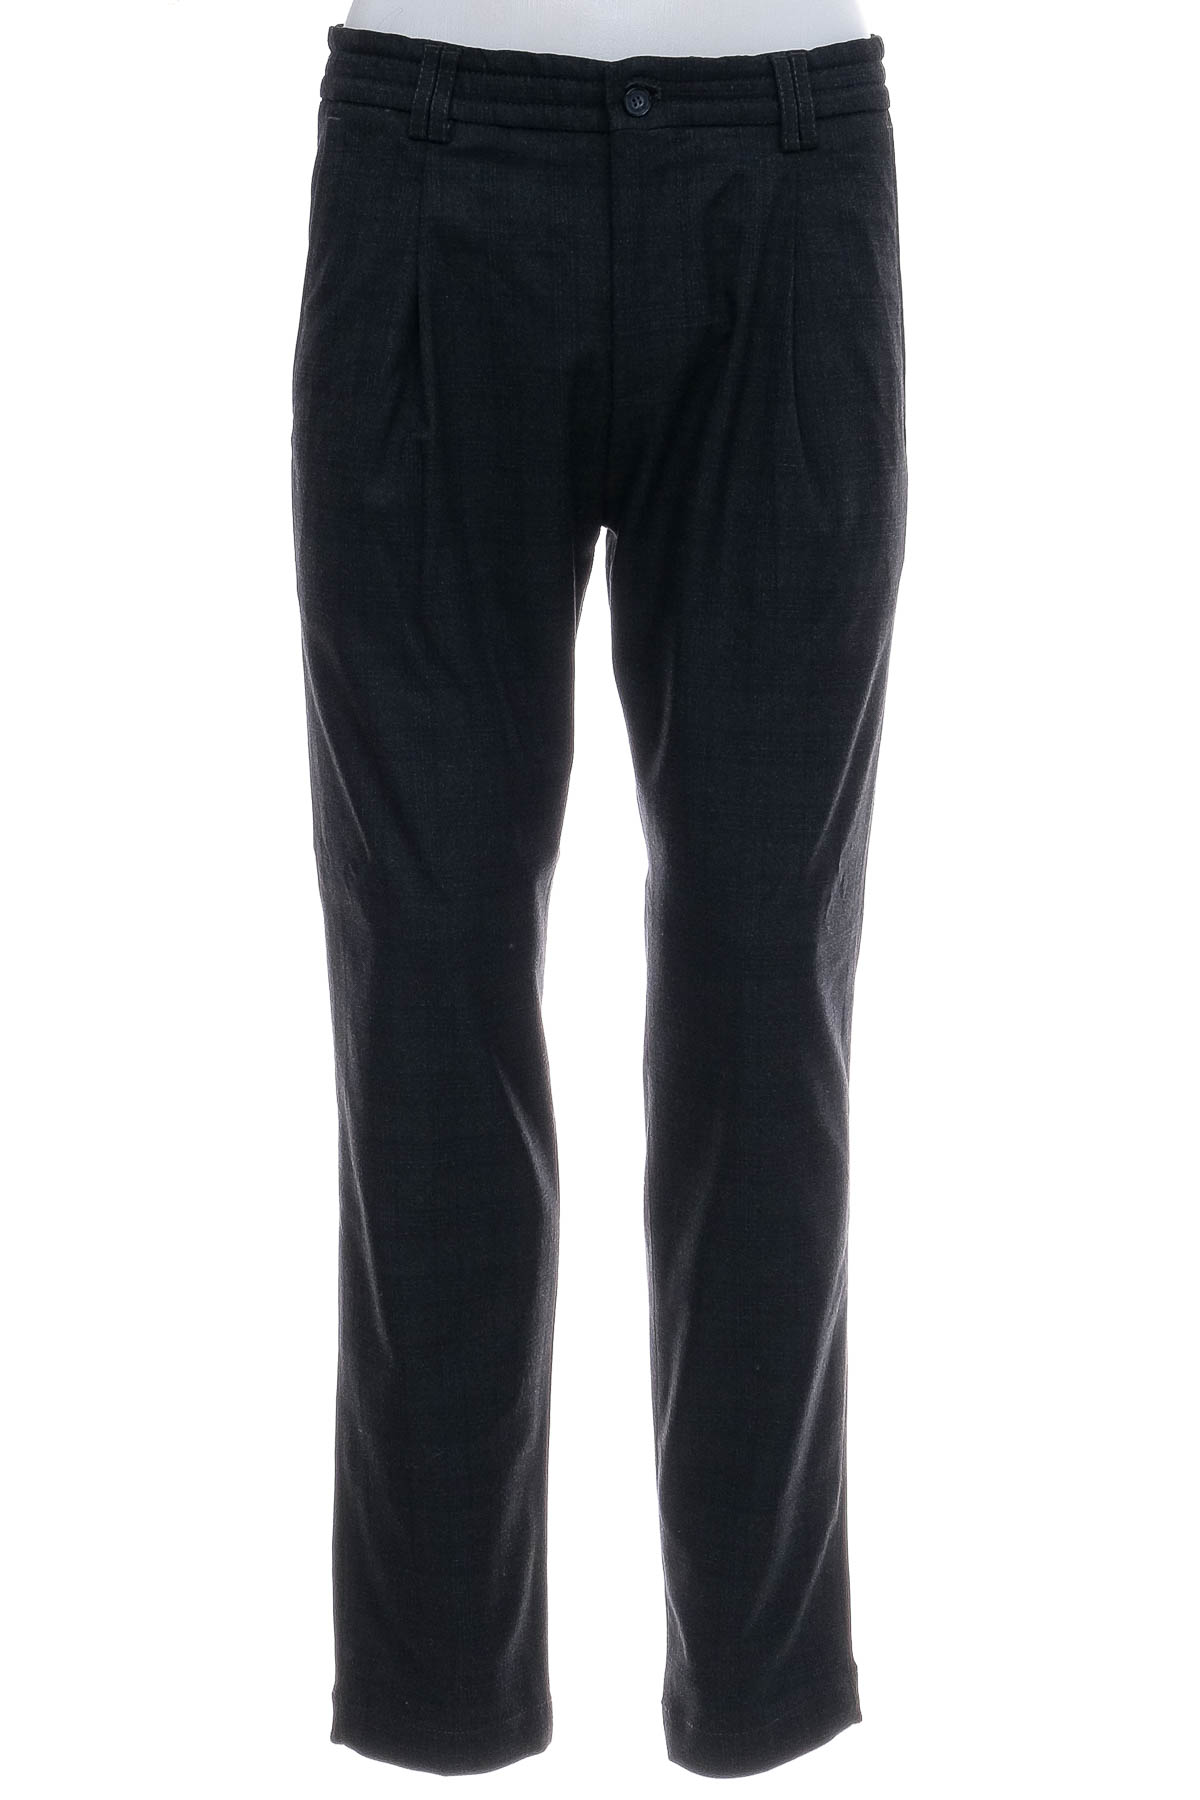 Men's trousers - CINQUE - 0